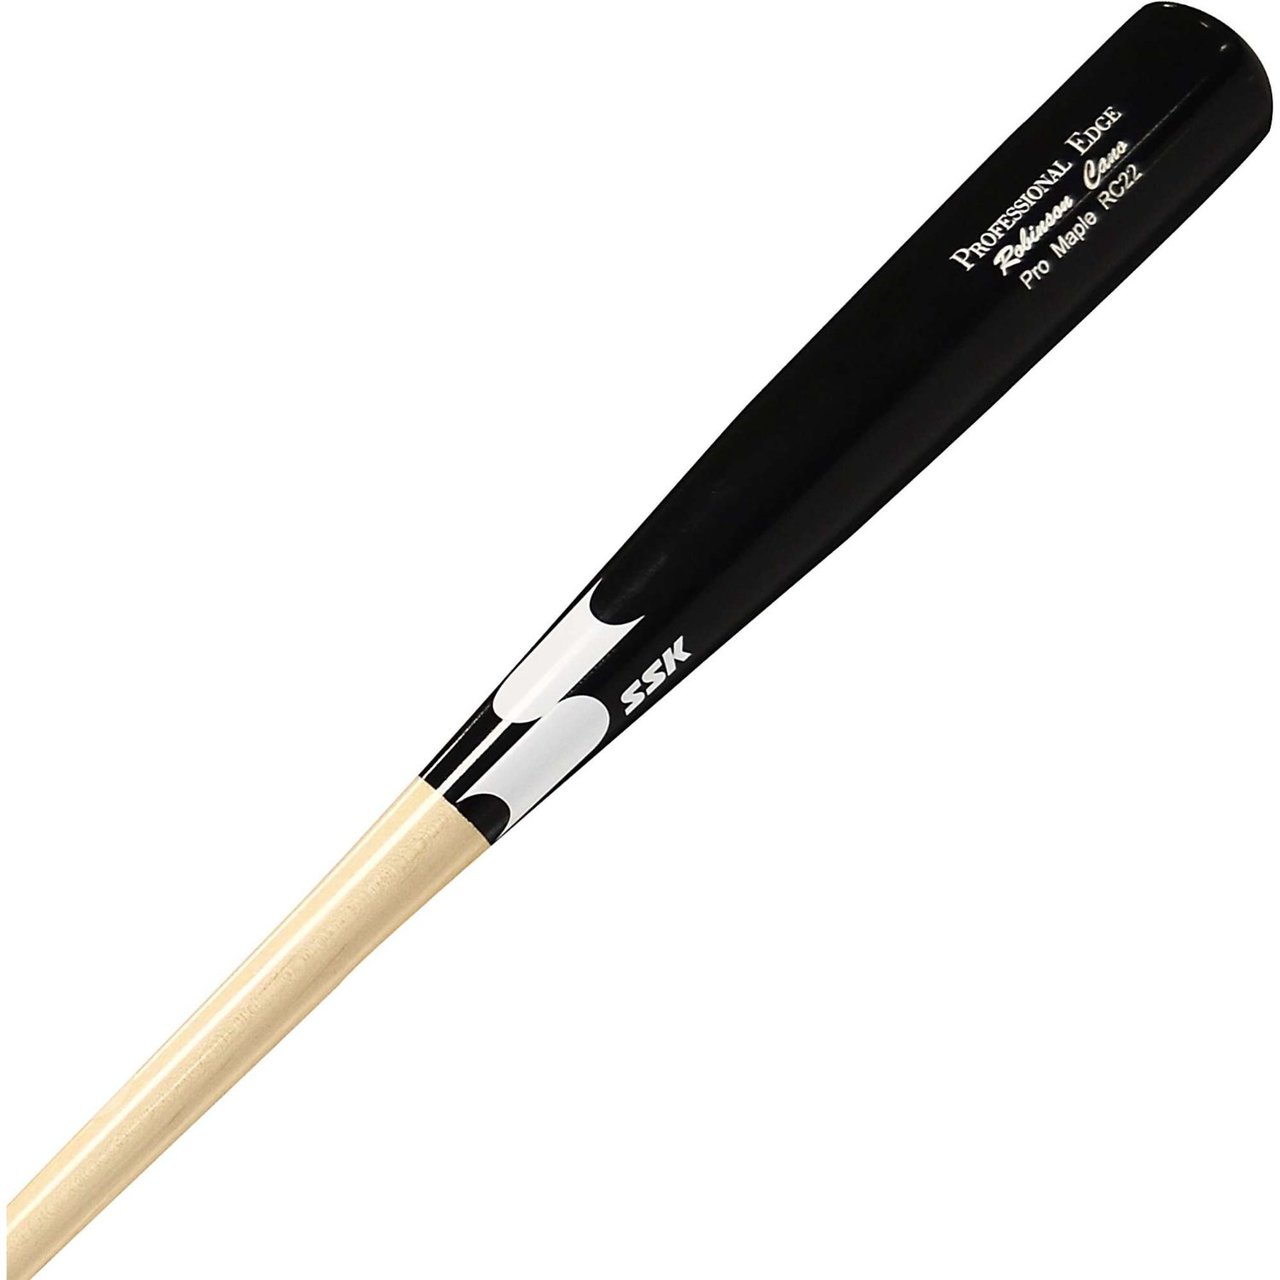 ssk-wood-baseball-bat-maple-rc-22-black-barrel-nat-handle-33-inch SM-RC22-BN-33 SSK 083351450618 The SSK RC22 33 inch Professional Edge maple wood bat from